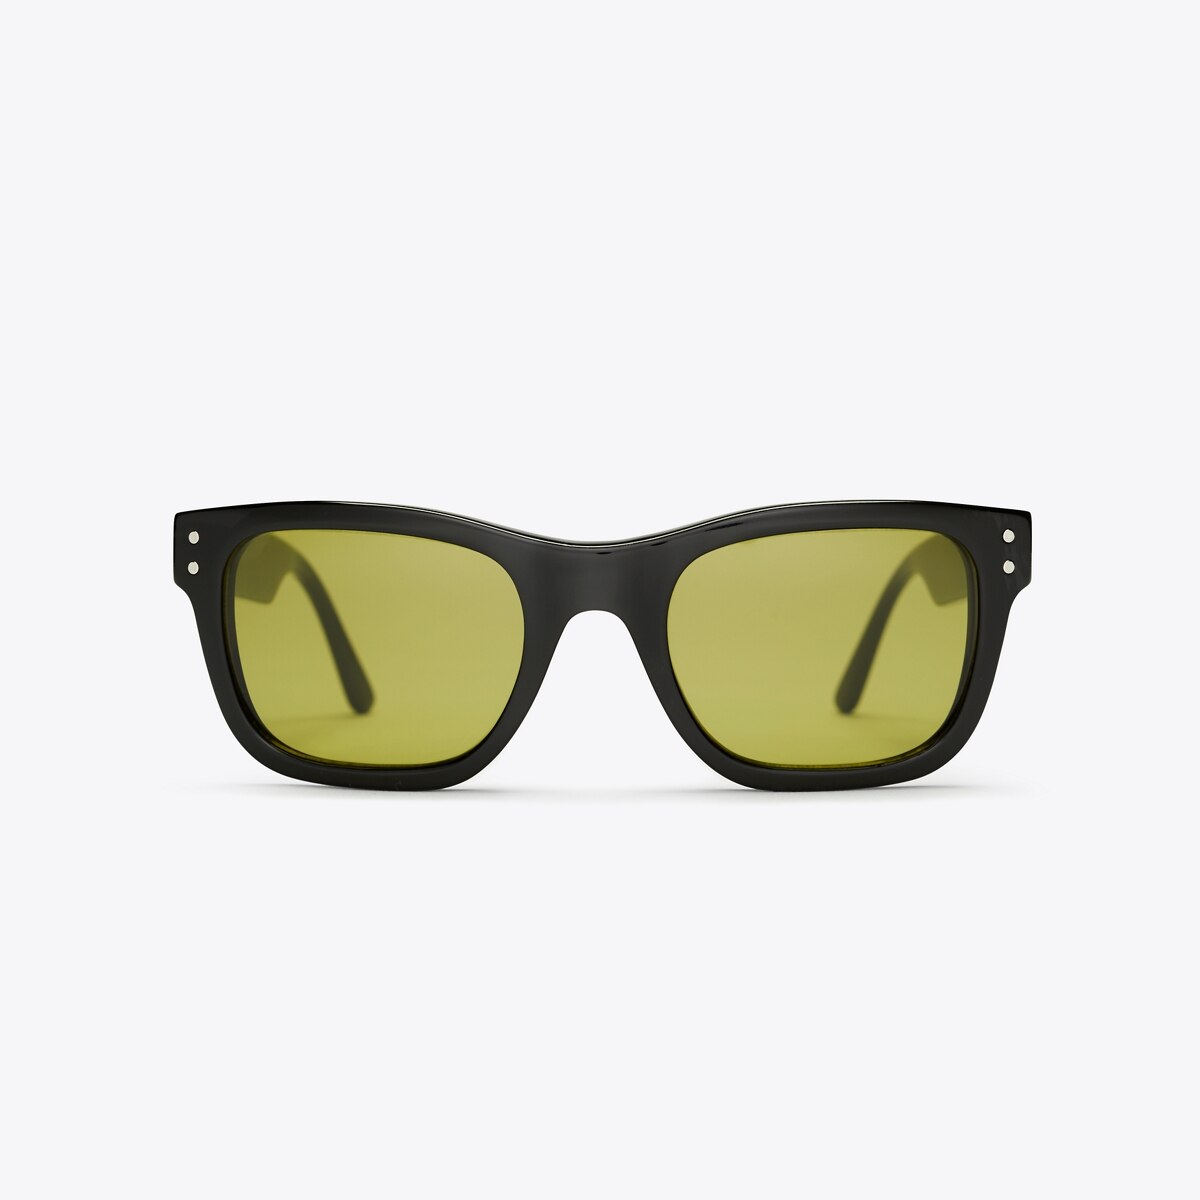 Buddy Sunglasses: Women's Designer Sunglasses & Eyewear | Tory Burch